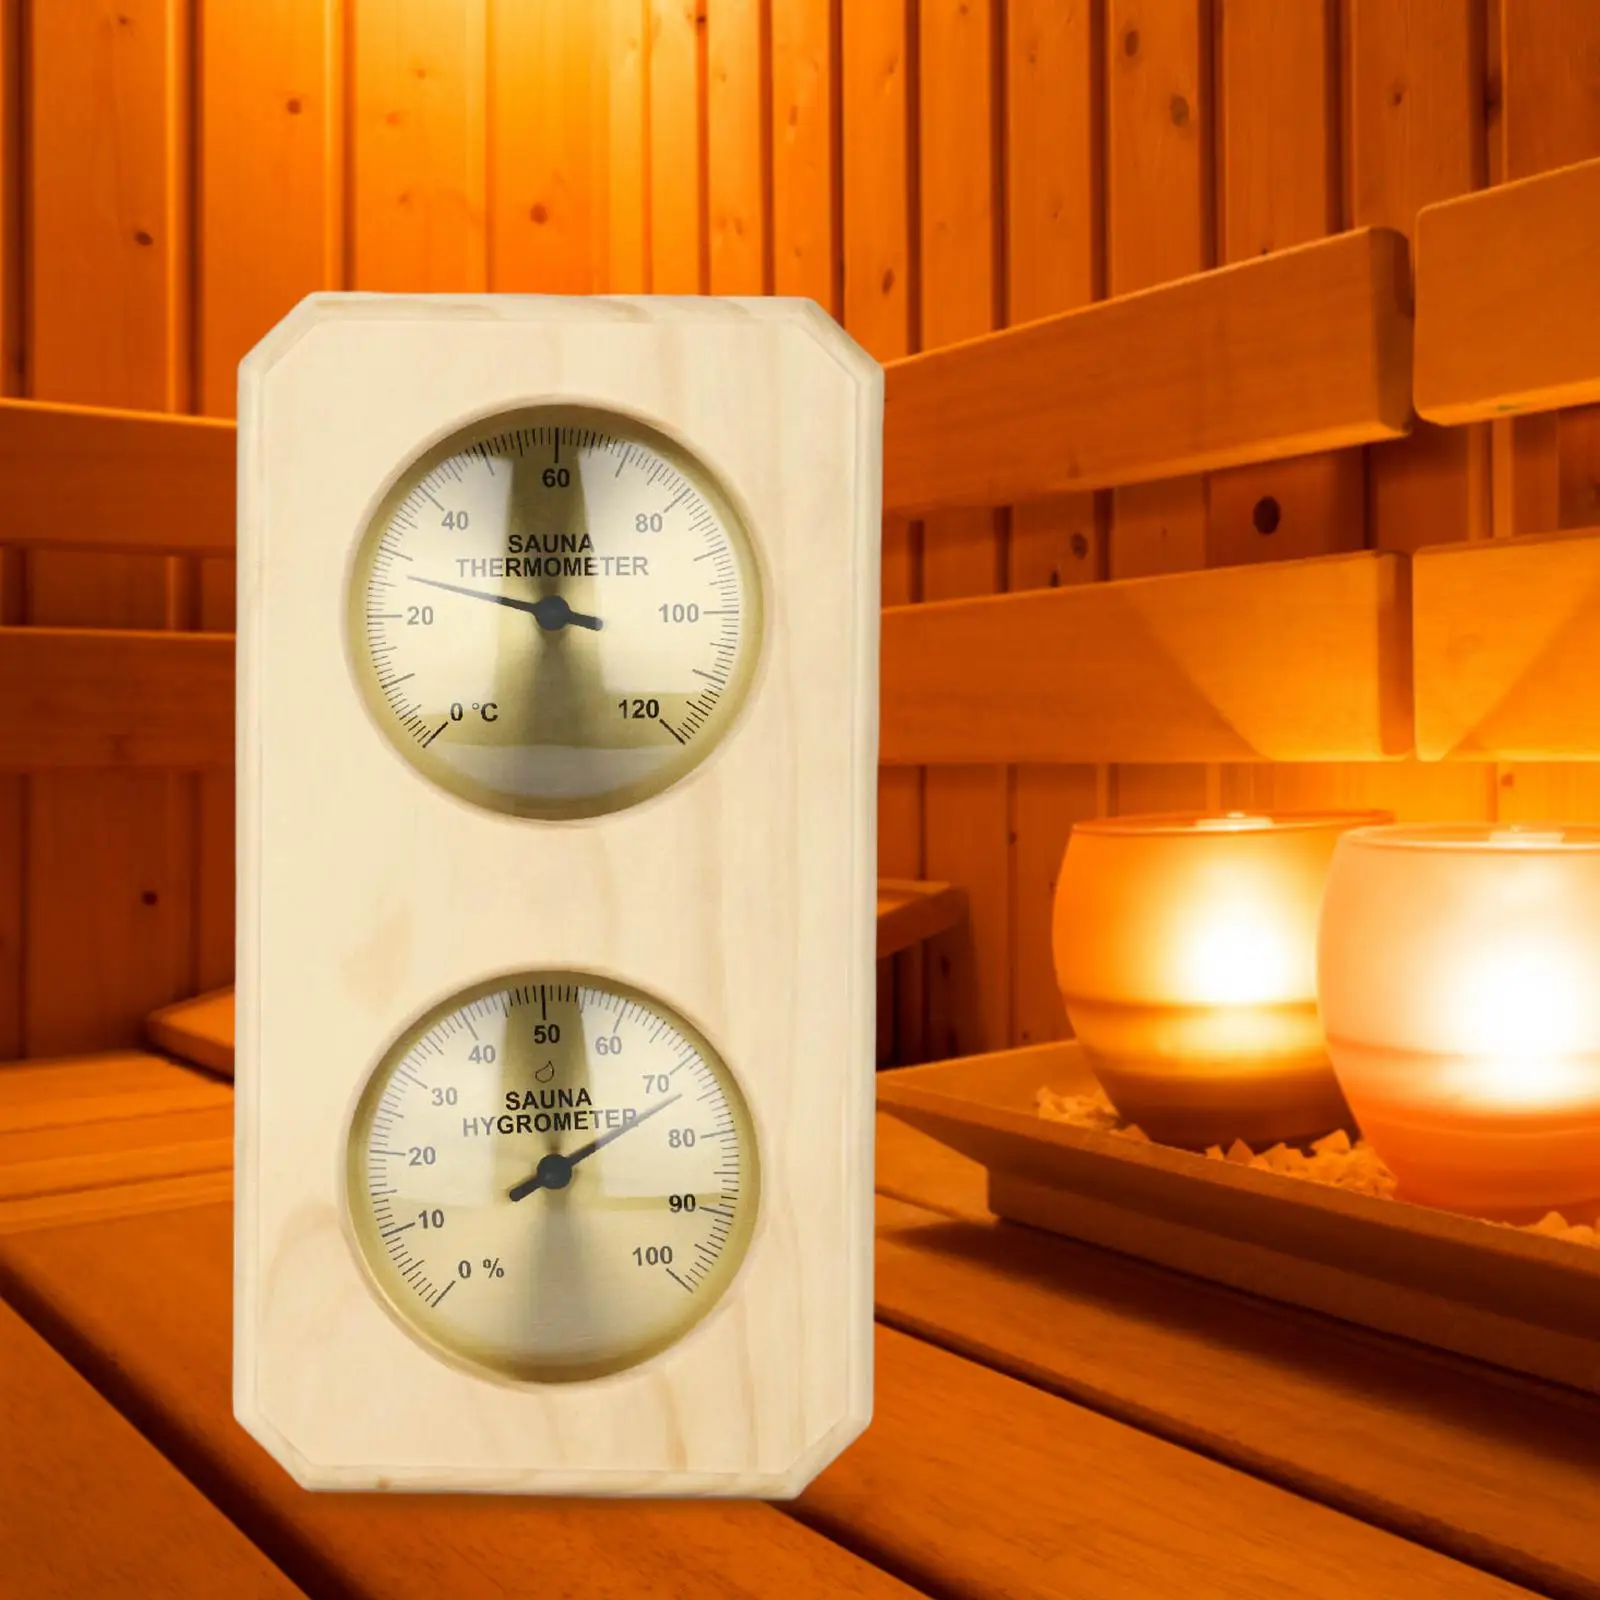 Wood Sauna Thermometer Hygrometer Sauna Room Accessories Horizontal